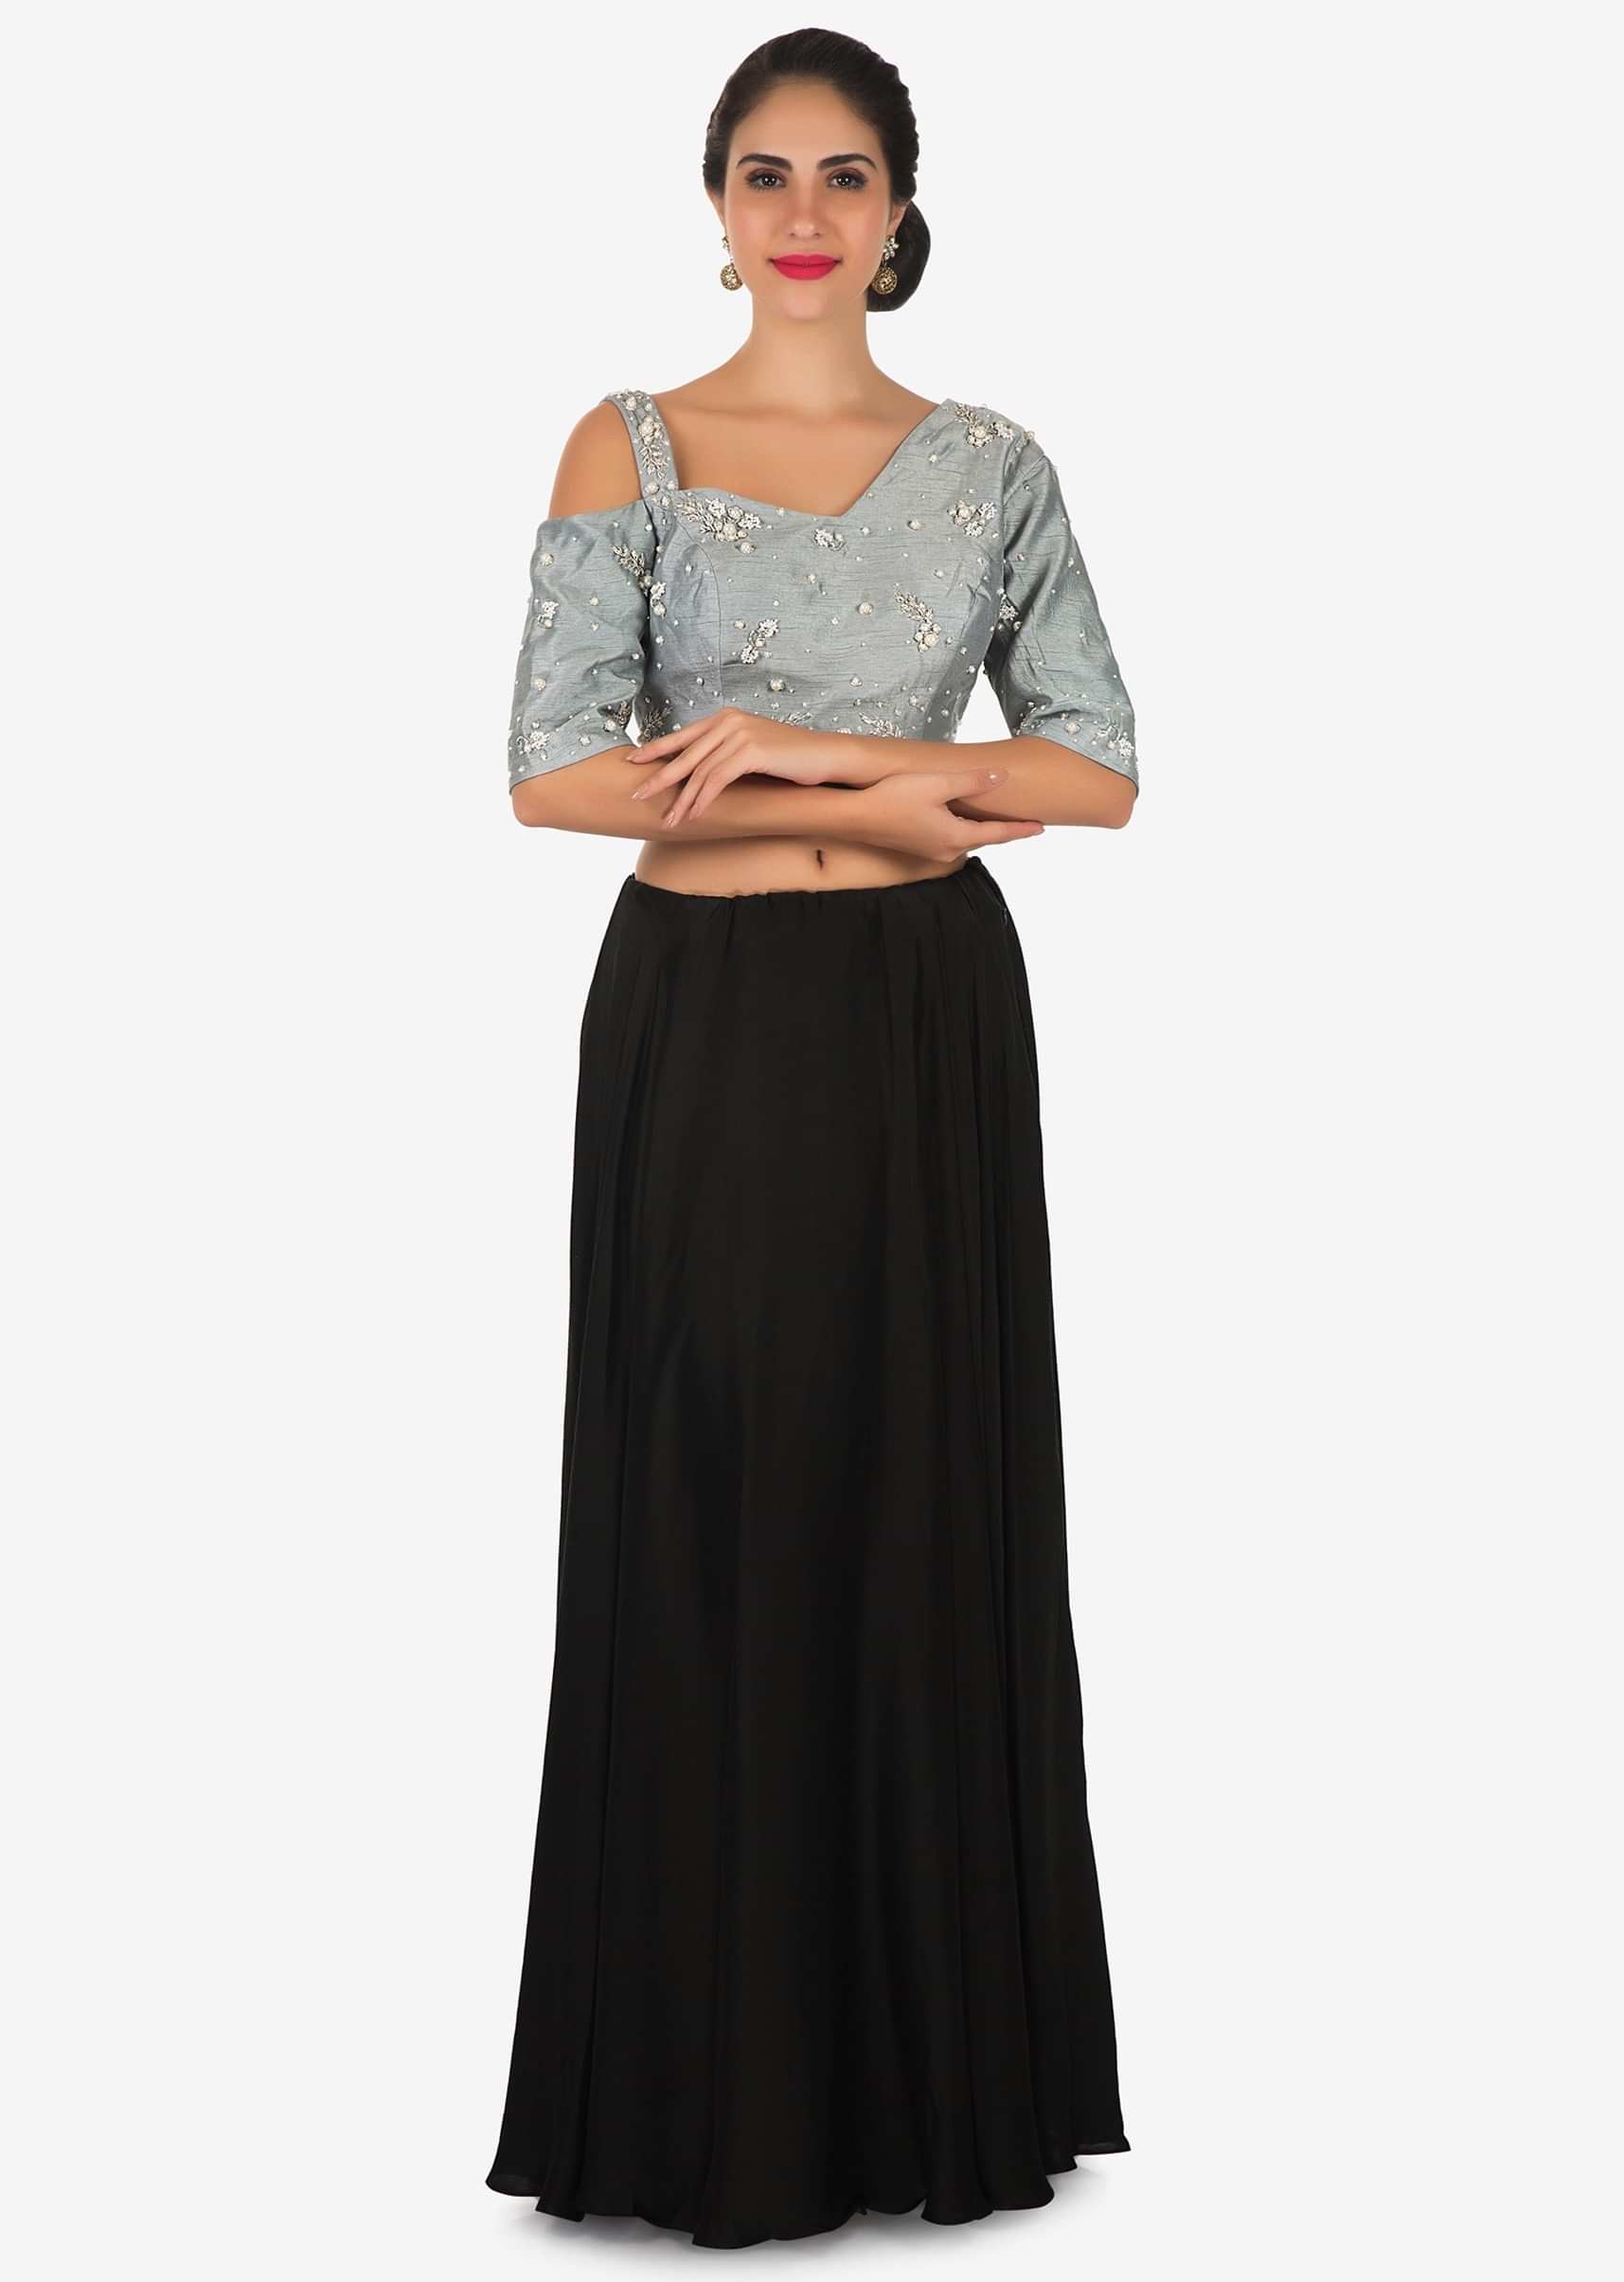 Debina Bonnerjee in Kalki black skirt with grey blouse matched with fancy dupatta only on Kalki